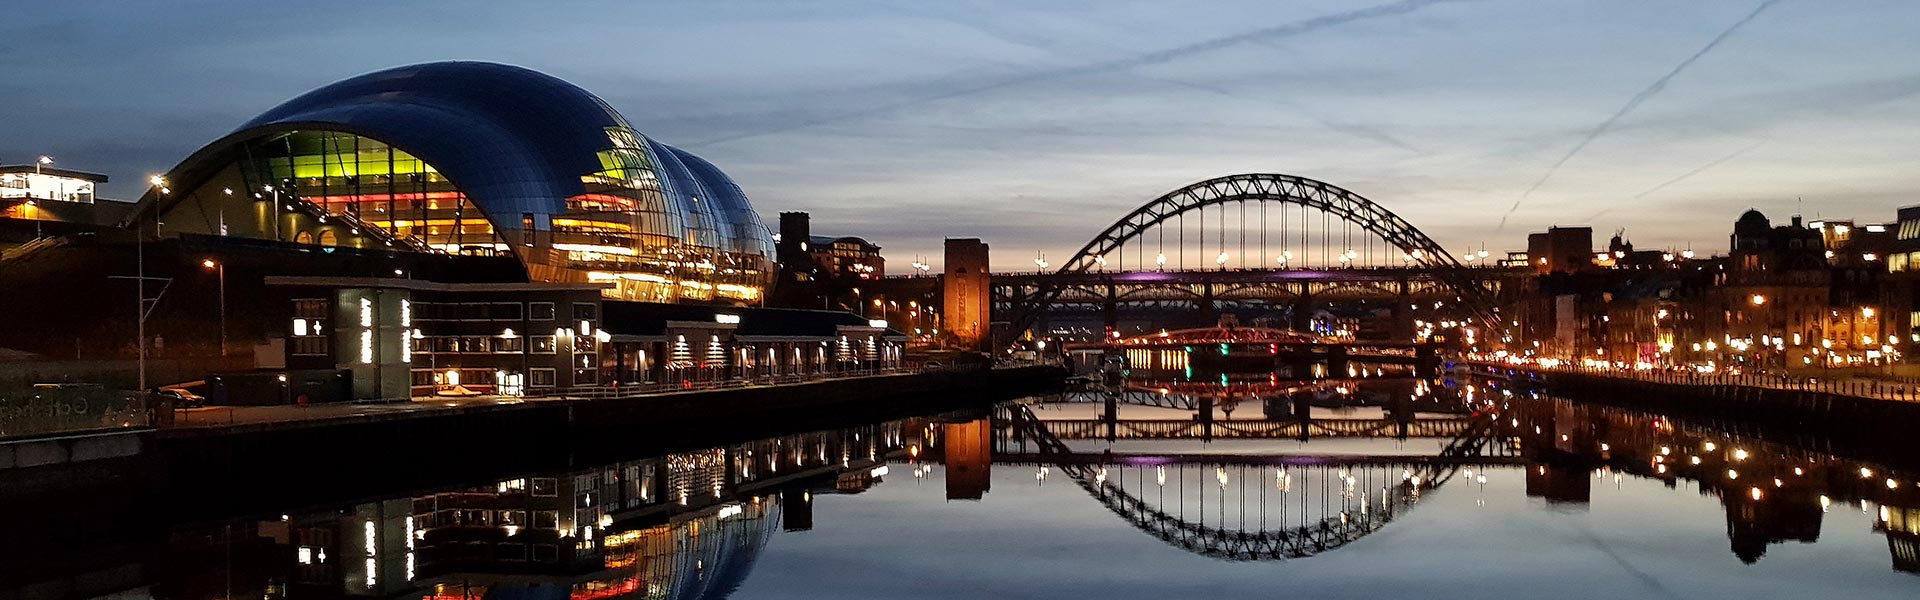 River Tyne, Newcastle